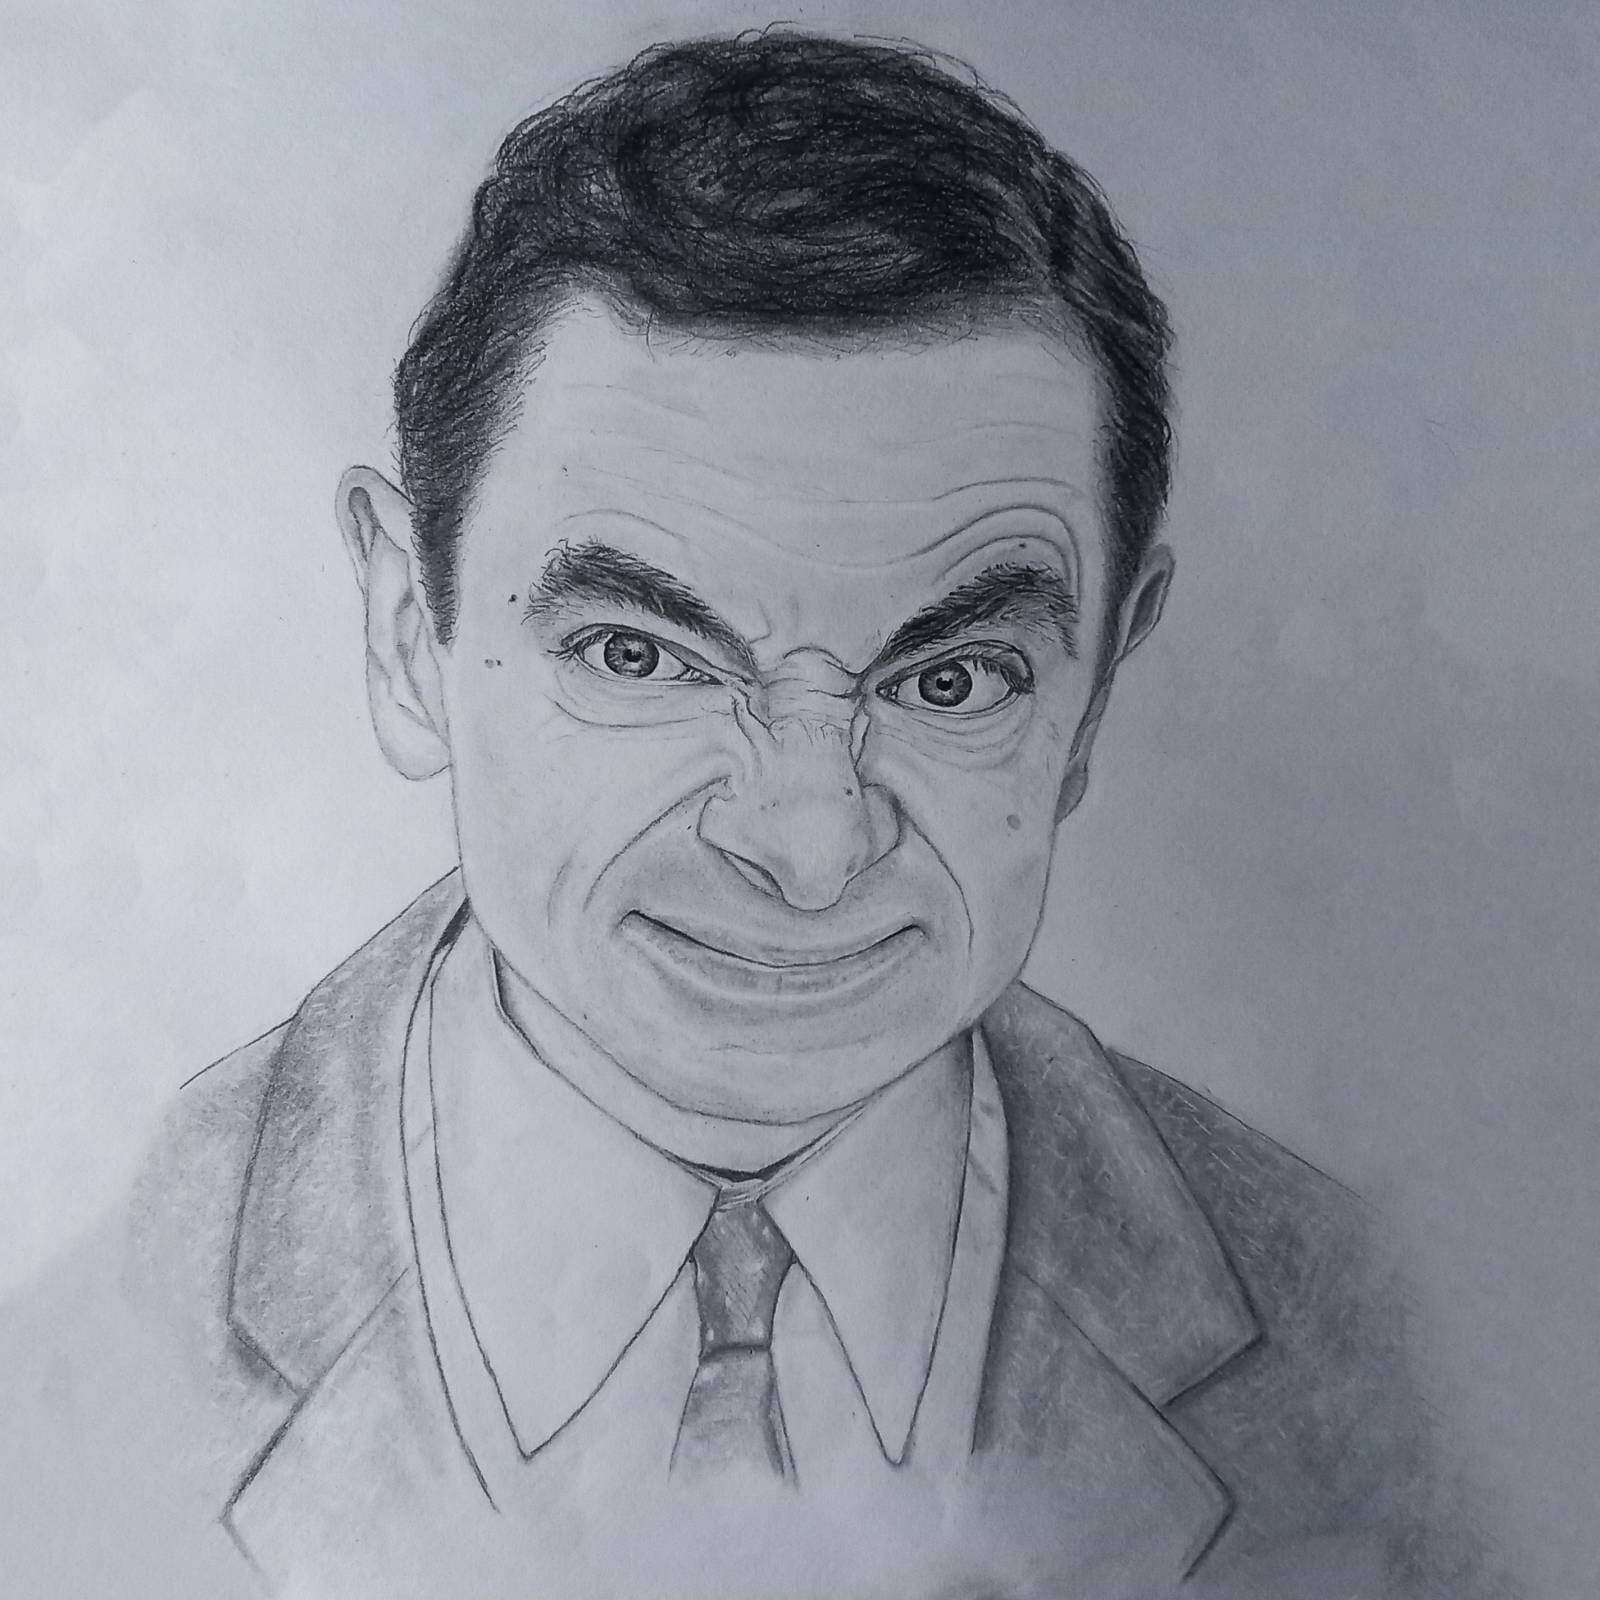 ArtStation - Pencil Drawing - Mr. Bean